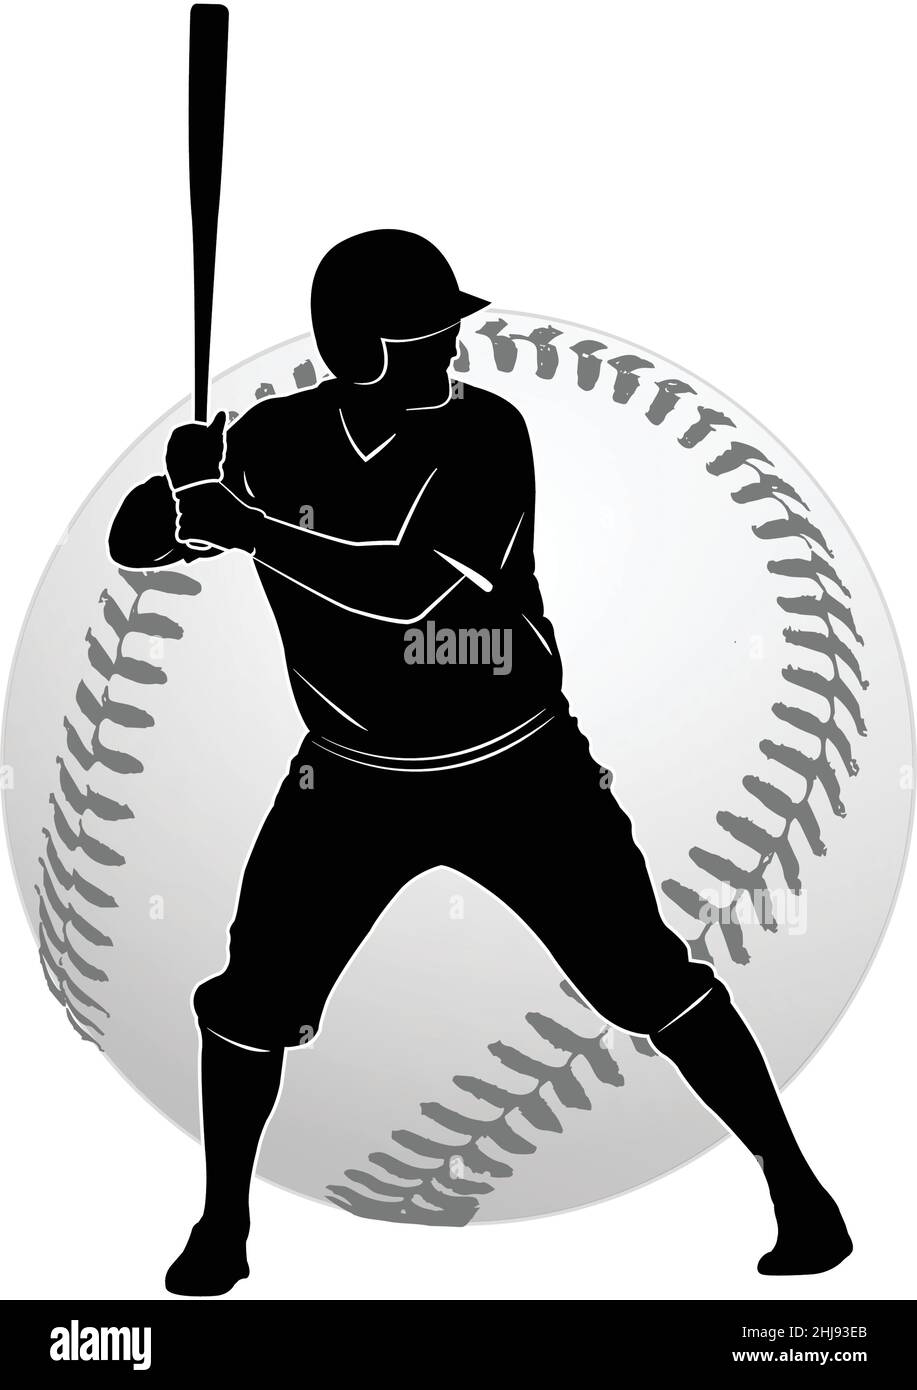 baseball player silhouette - vector Stock Vector